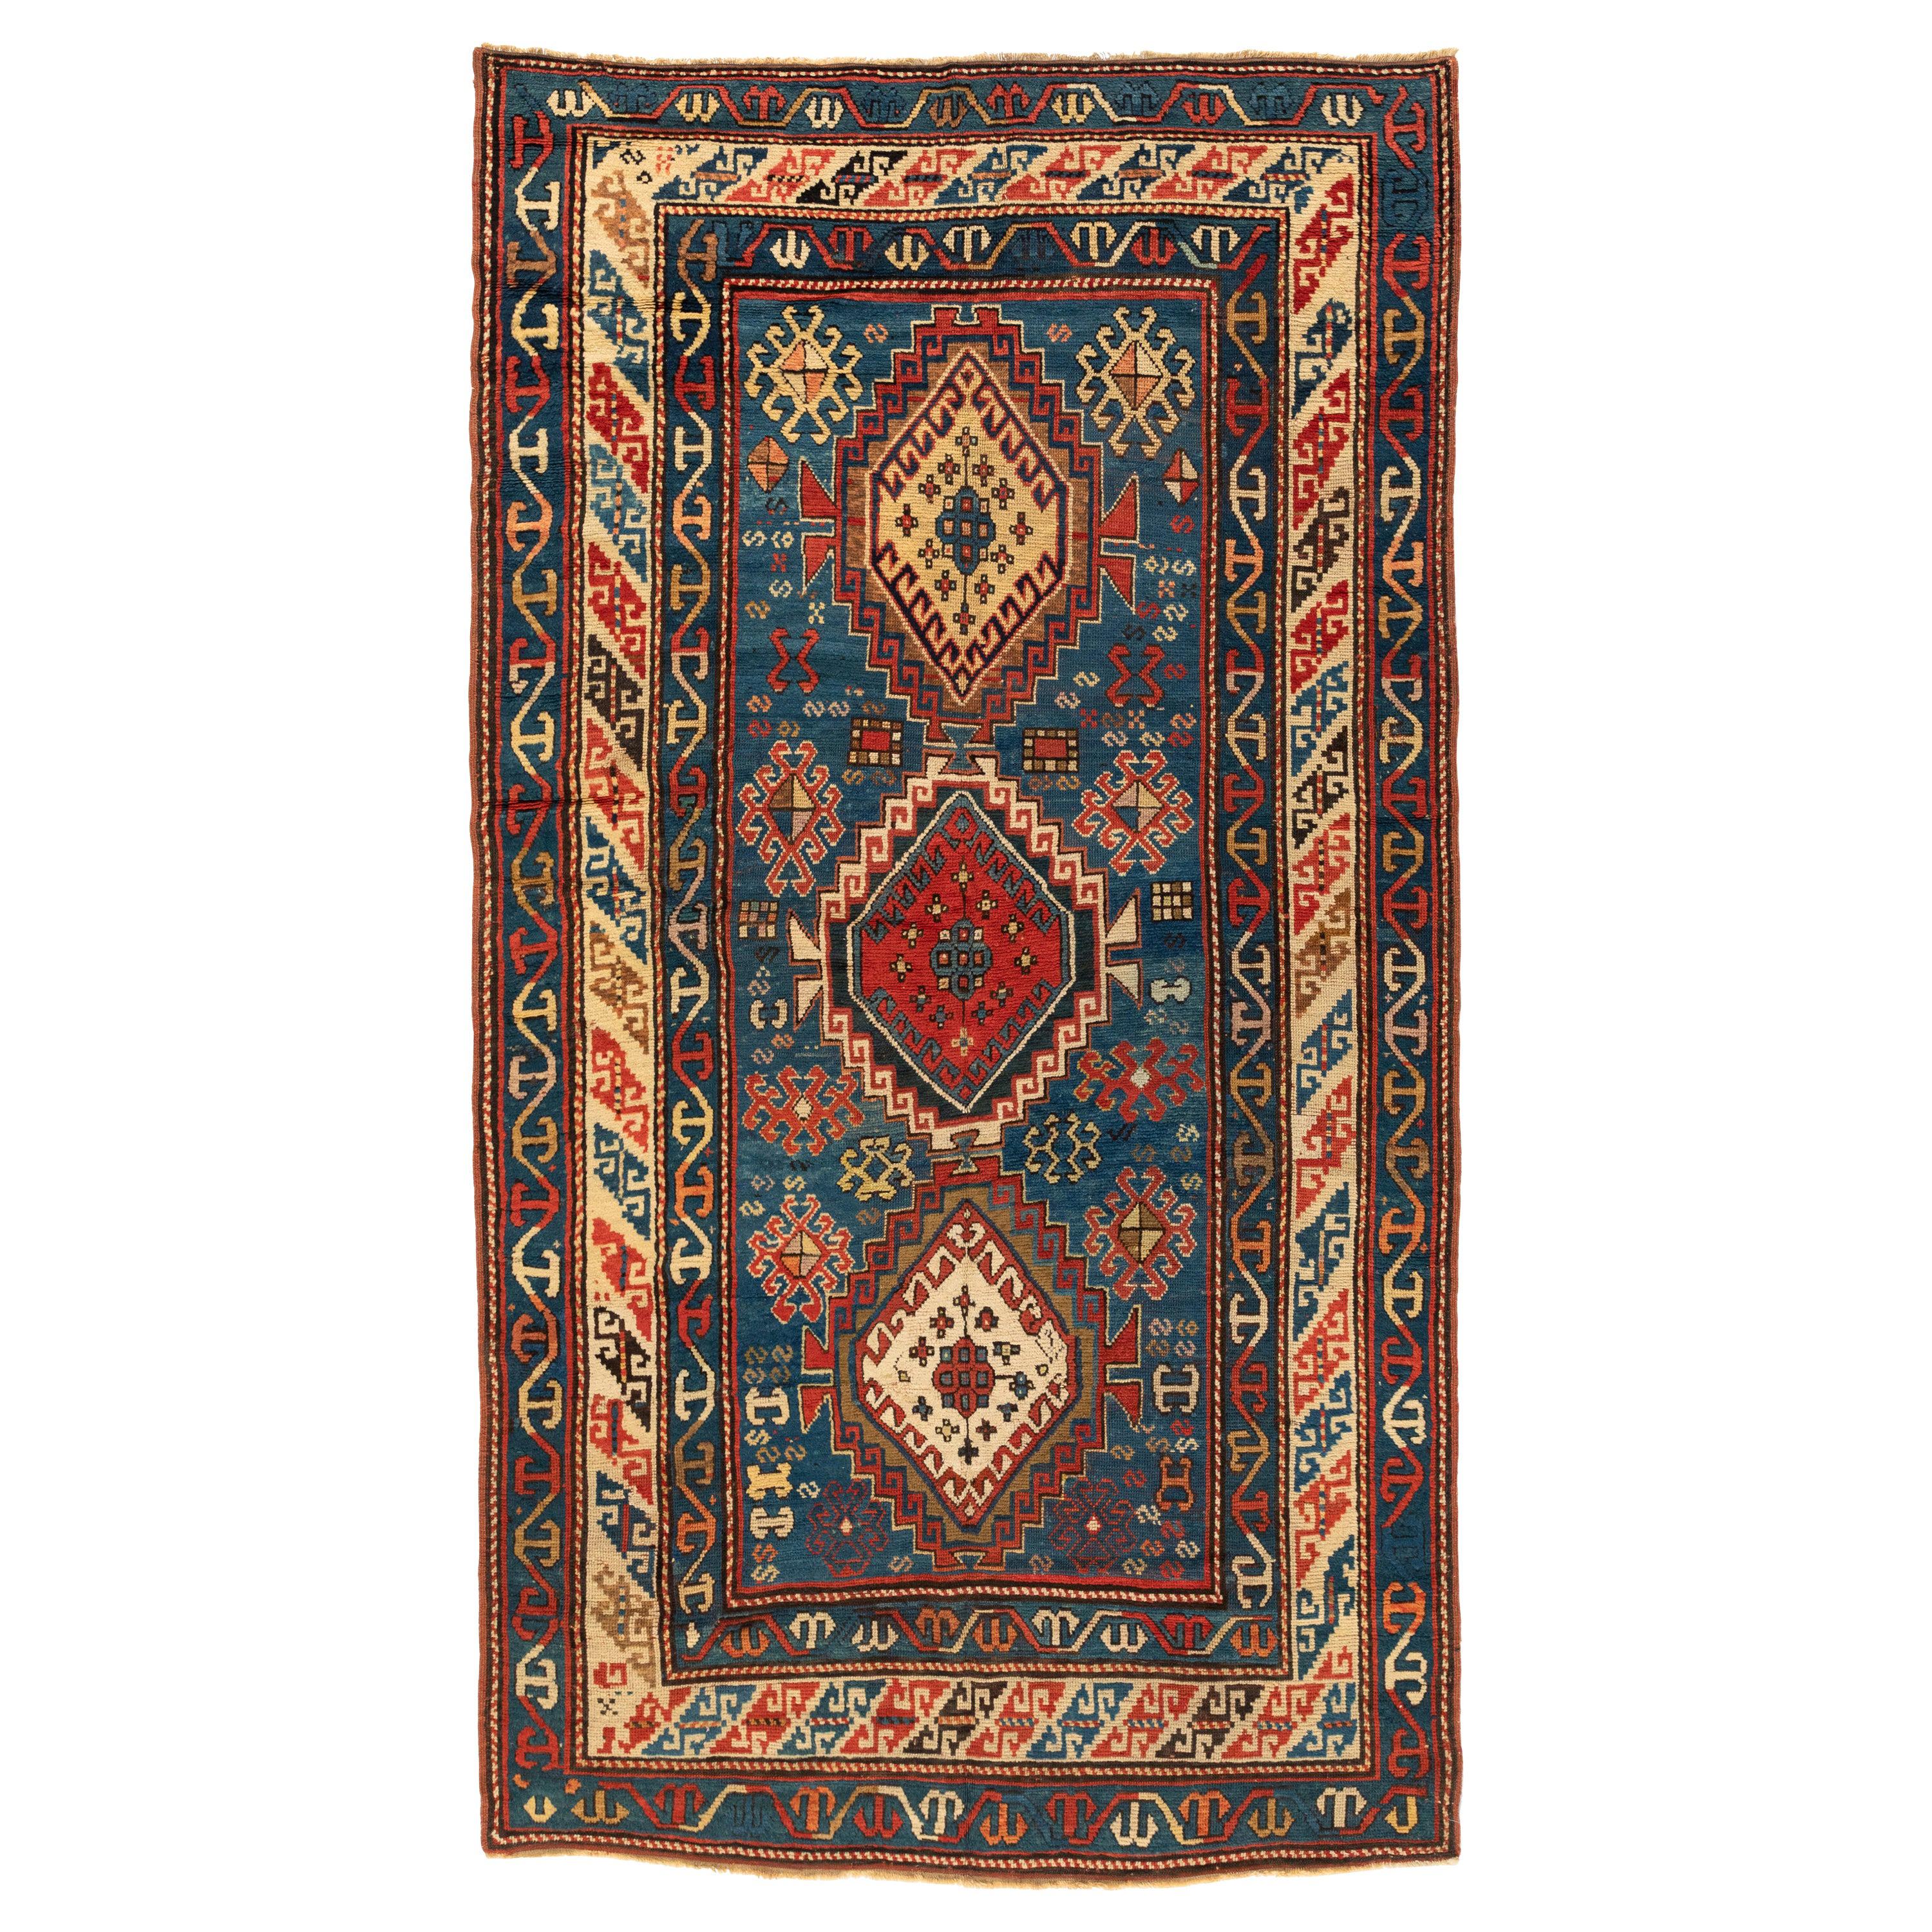 Antique Caucasian Tribal Blue Red Kazak Carpet, c. 1900s-1910s